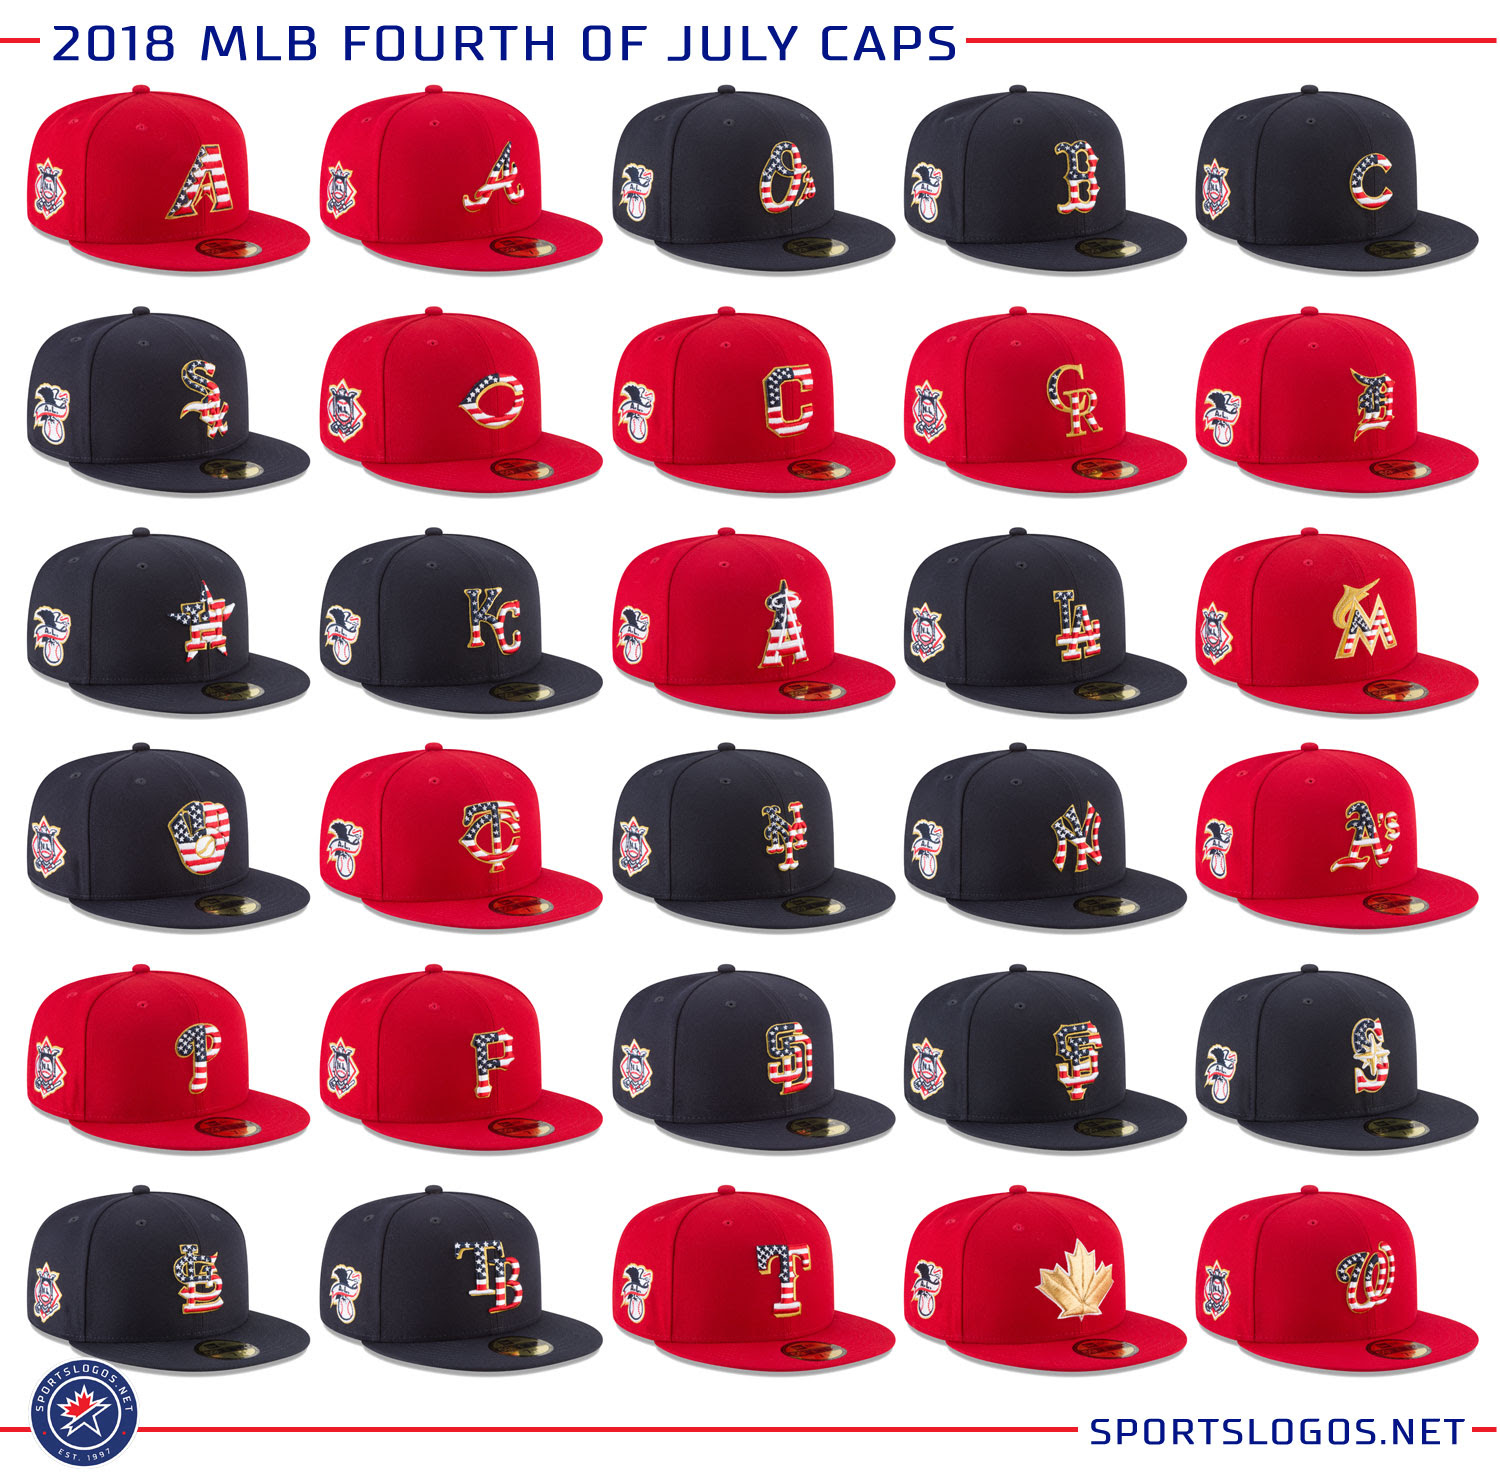 mlb 4th of july hats 2019